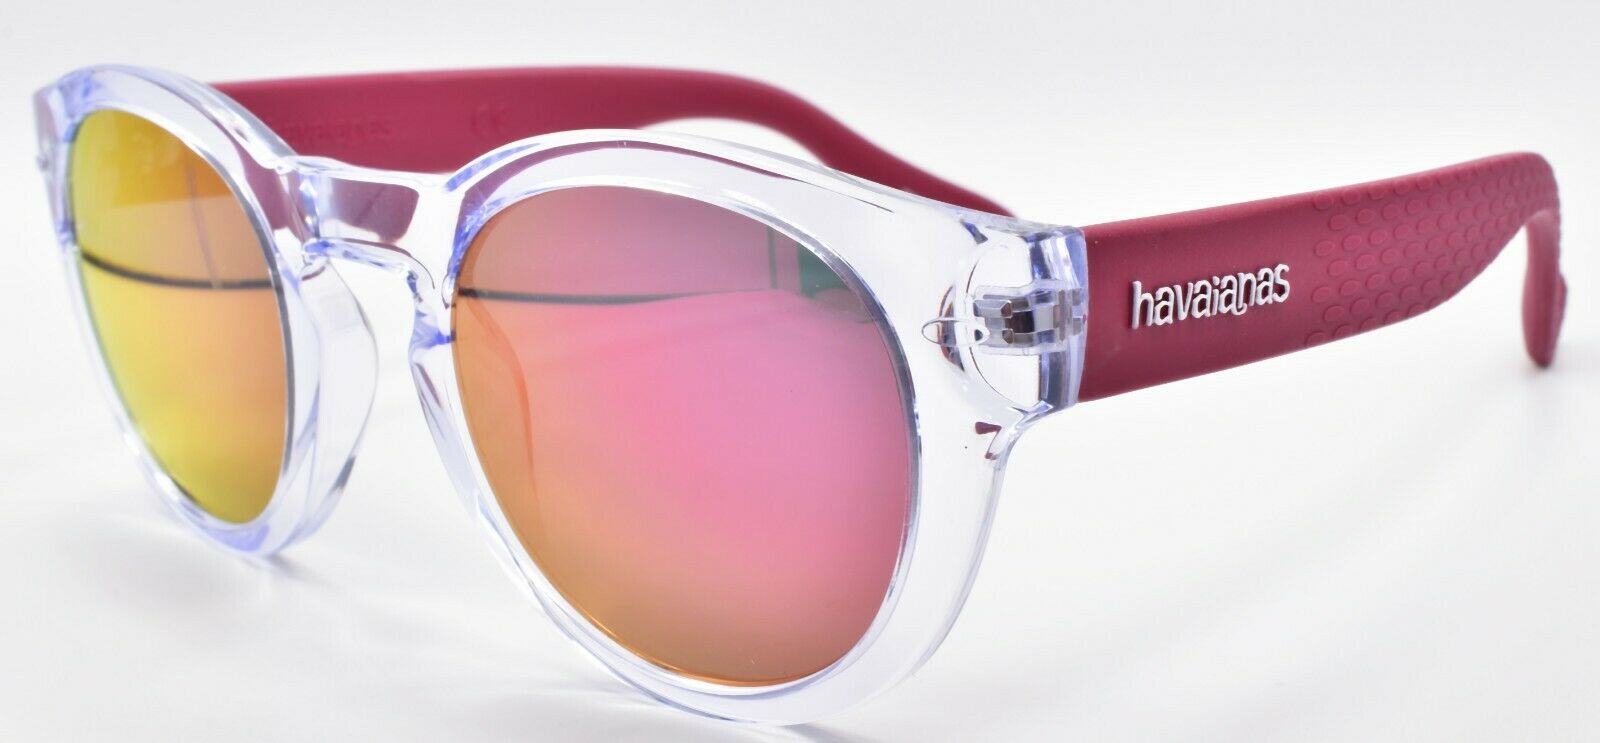 1-Havaianas Trancoso /M 22KVQ Sunglasses 49-24-145 Crystal Burgundy / Mirror Pink-762753944467-IKSpecs